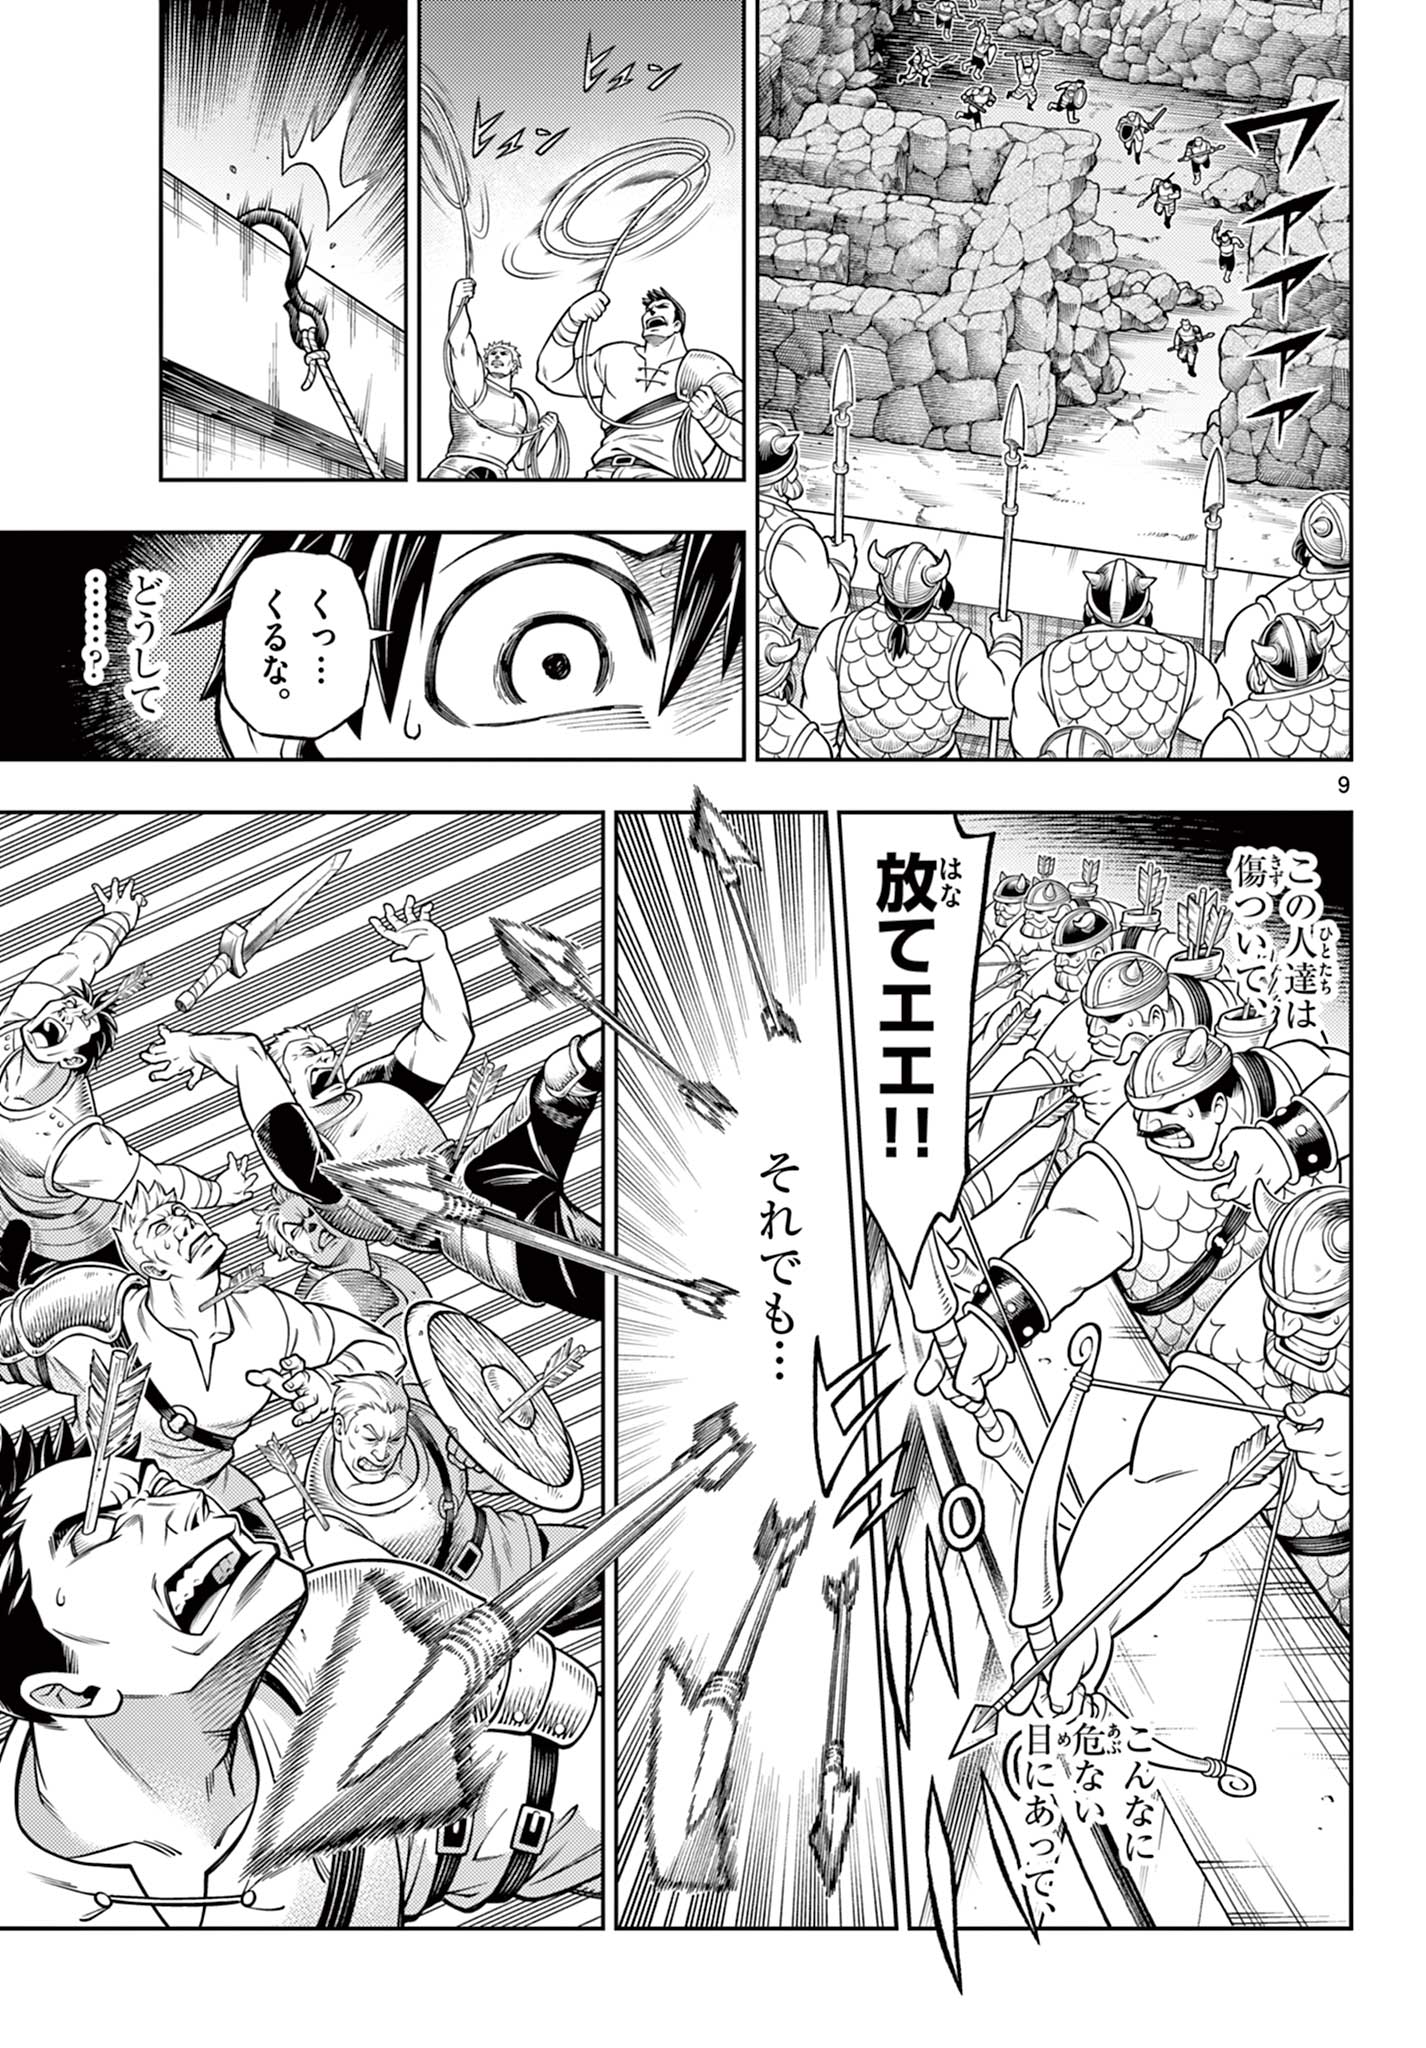 Soara to Mamono no ie - Chapter 28 - Page 9